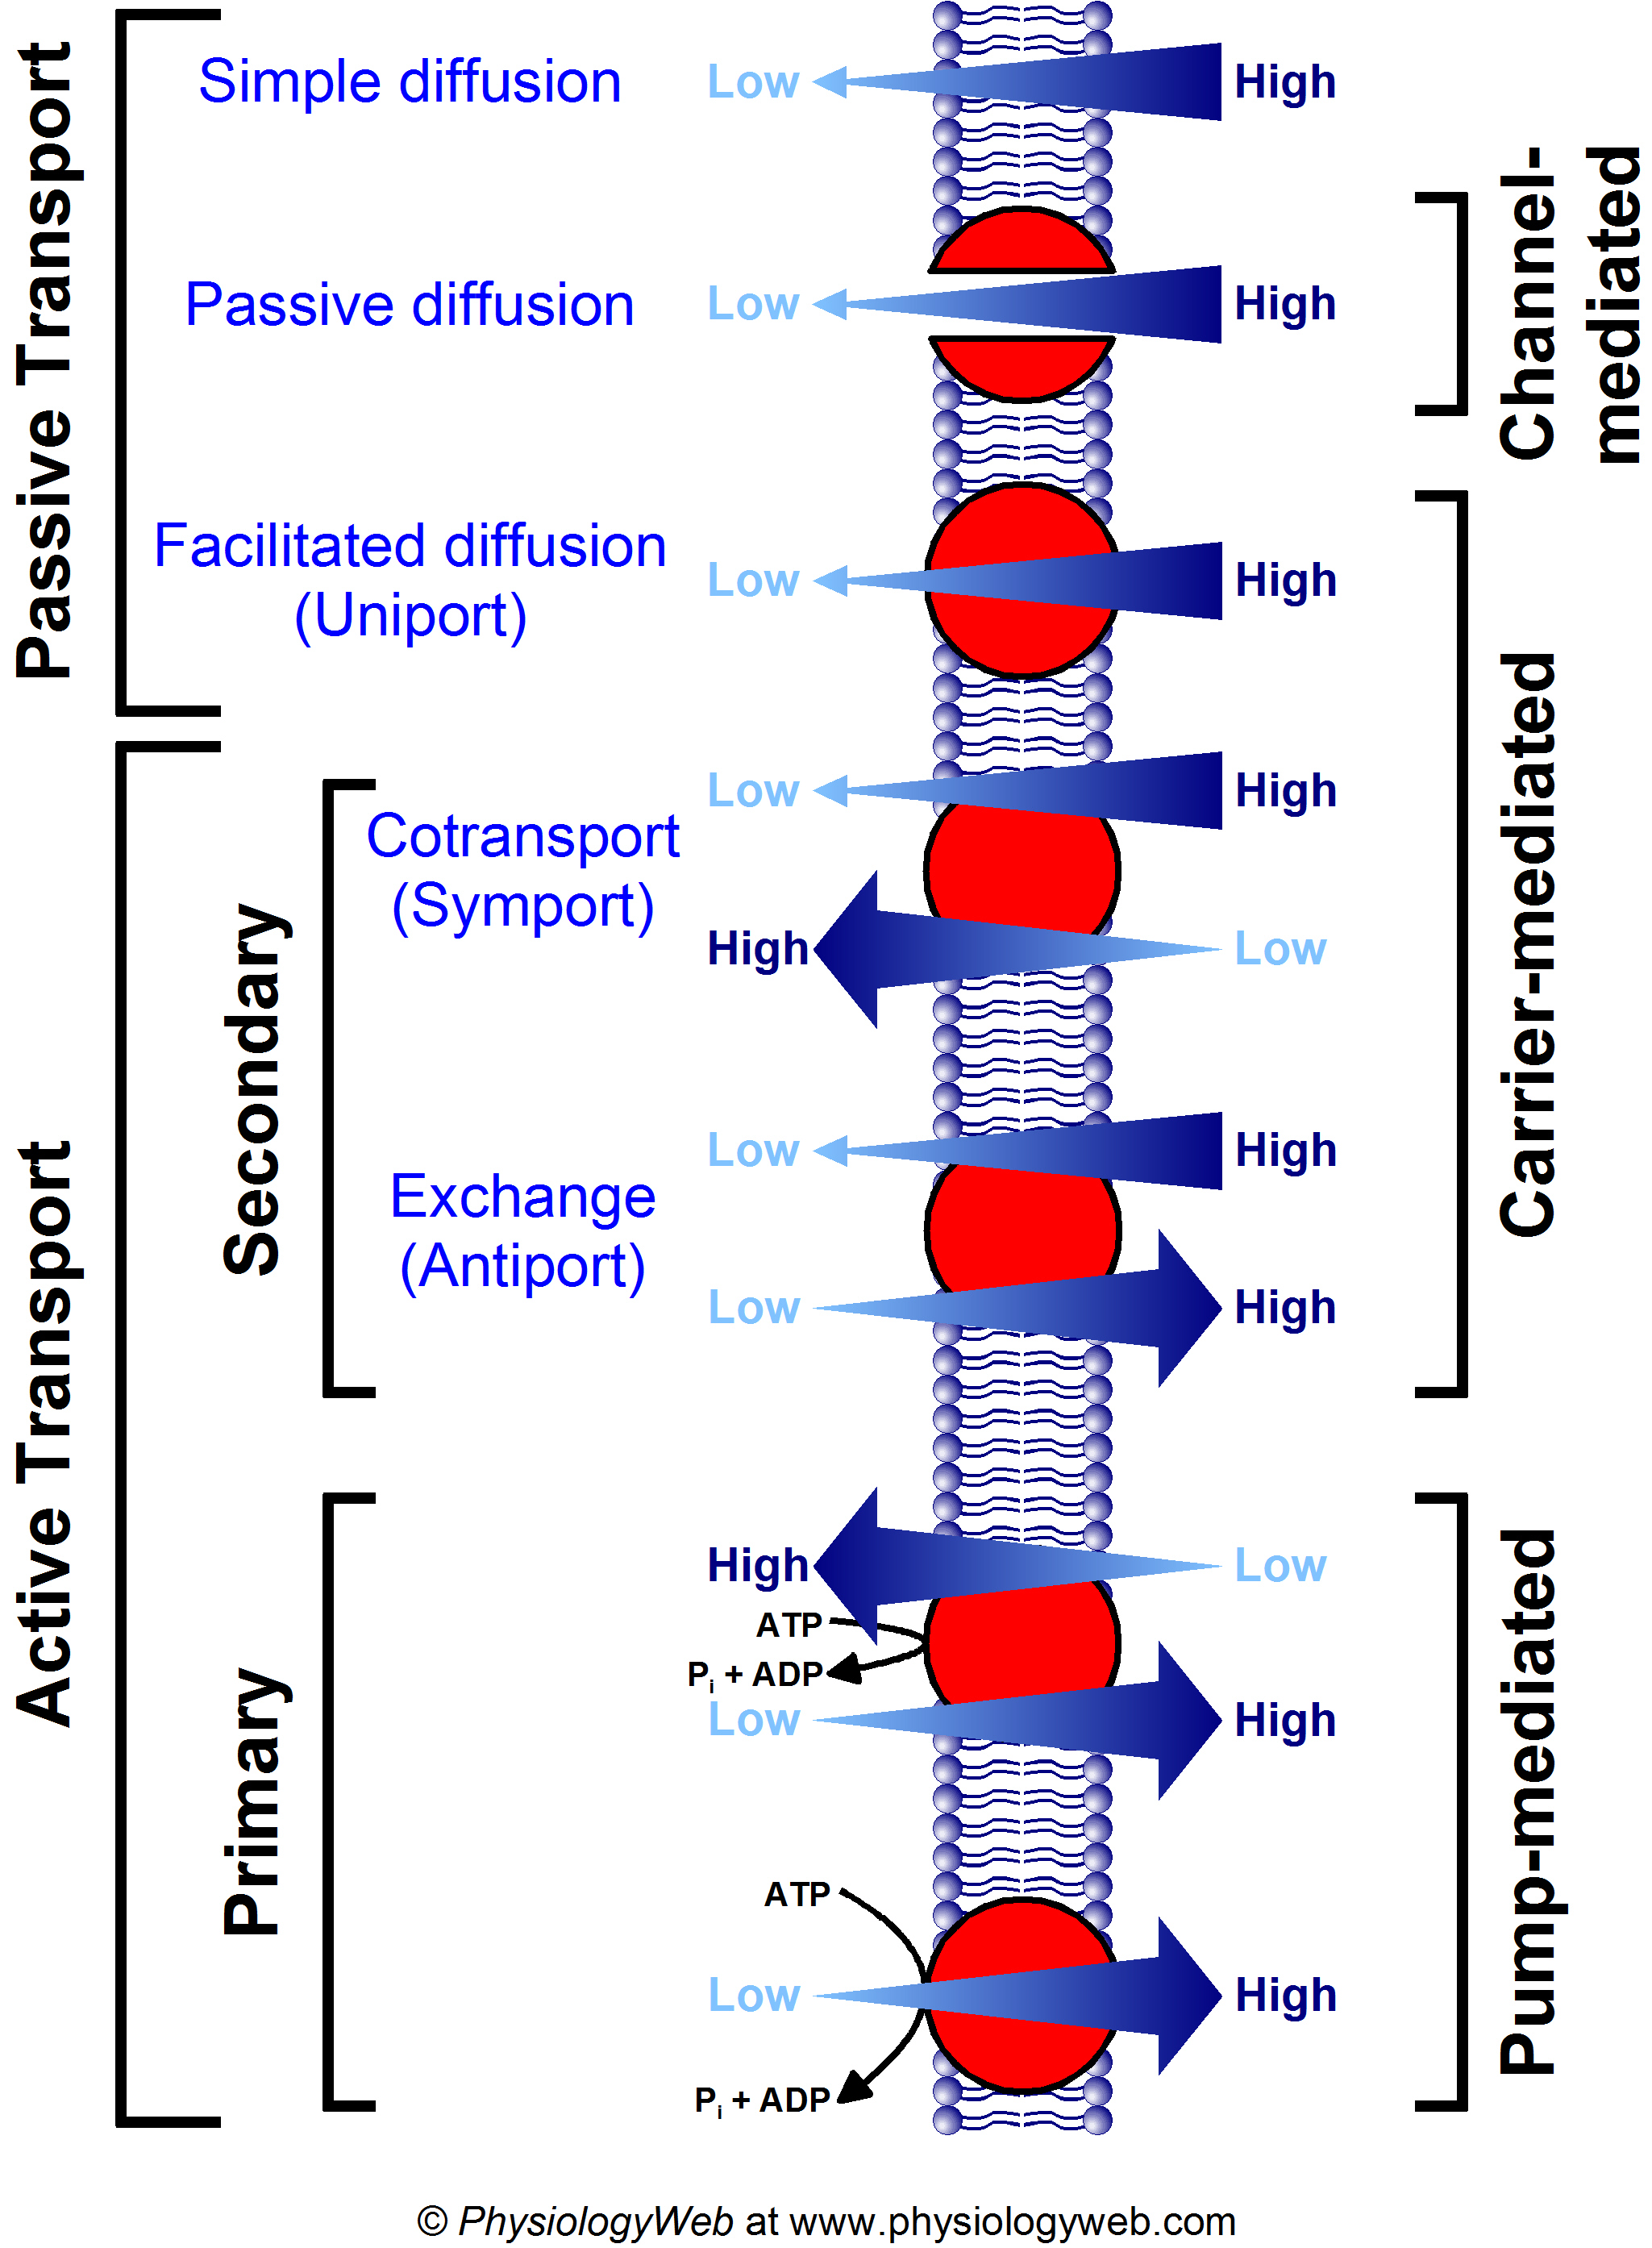 Summary of membrane transport processes